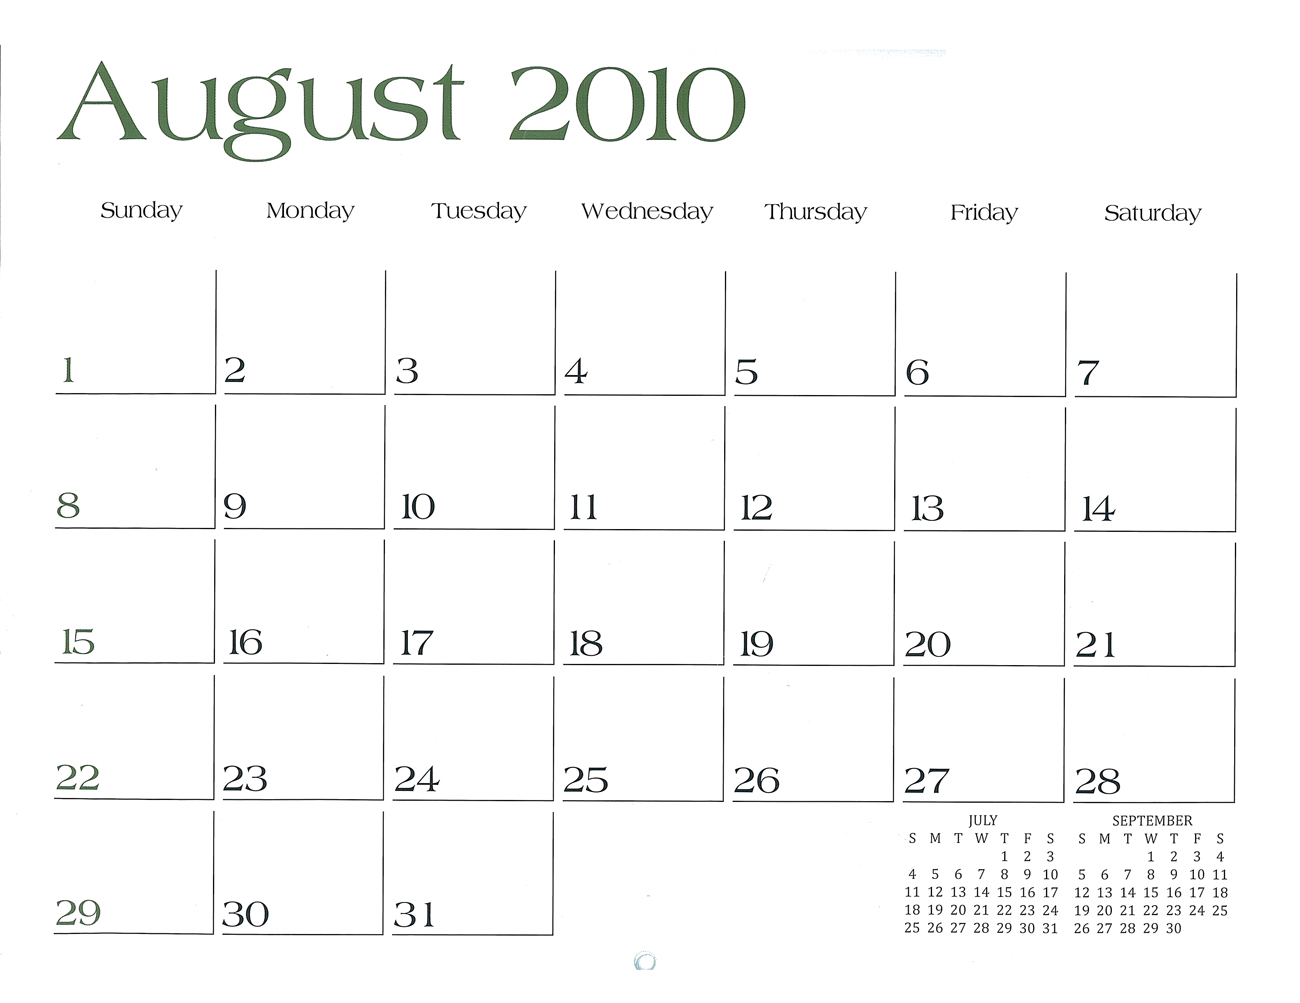 2010 Prophecy Calendar: August - Wars and rumors of wars